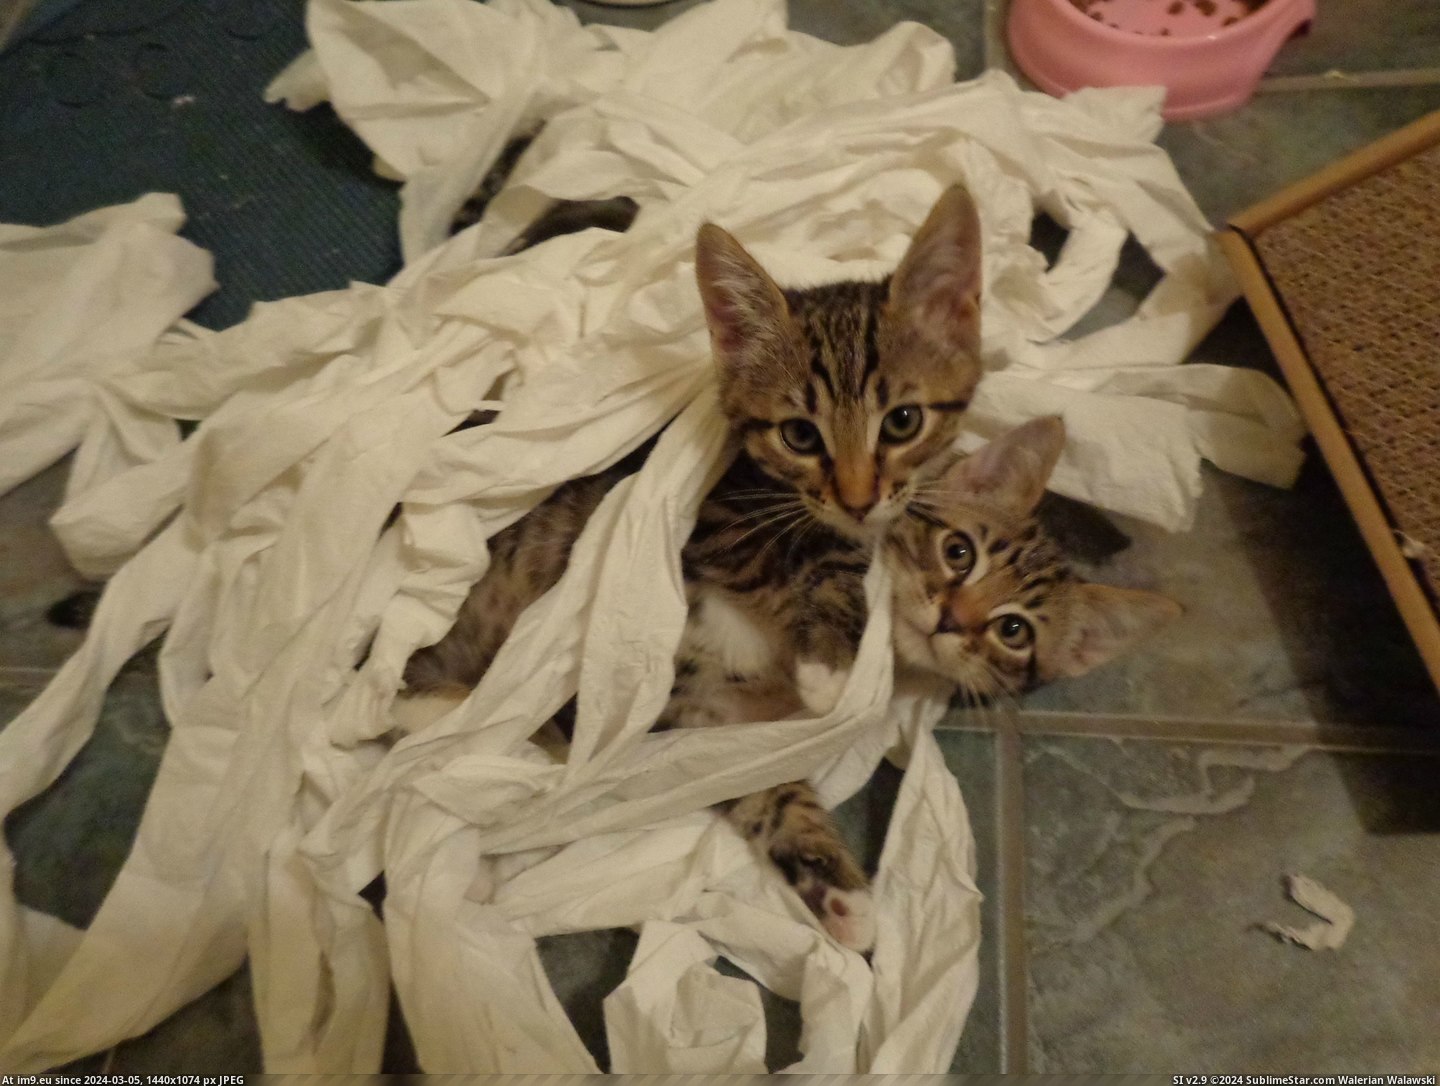 #New #Toilet #Roll #Discovered #Kittens #Paper [Aww] So my new kittens discovered the toilet paper roll... Pic. (Obraz z album My r/AWW favs))